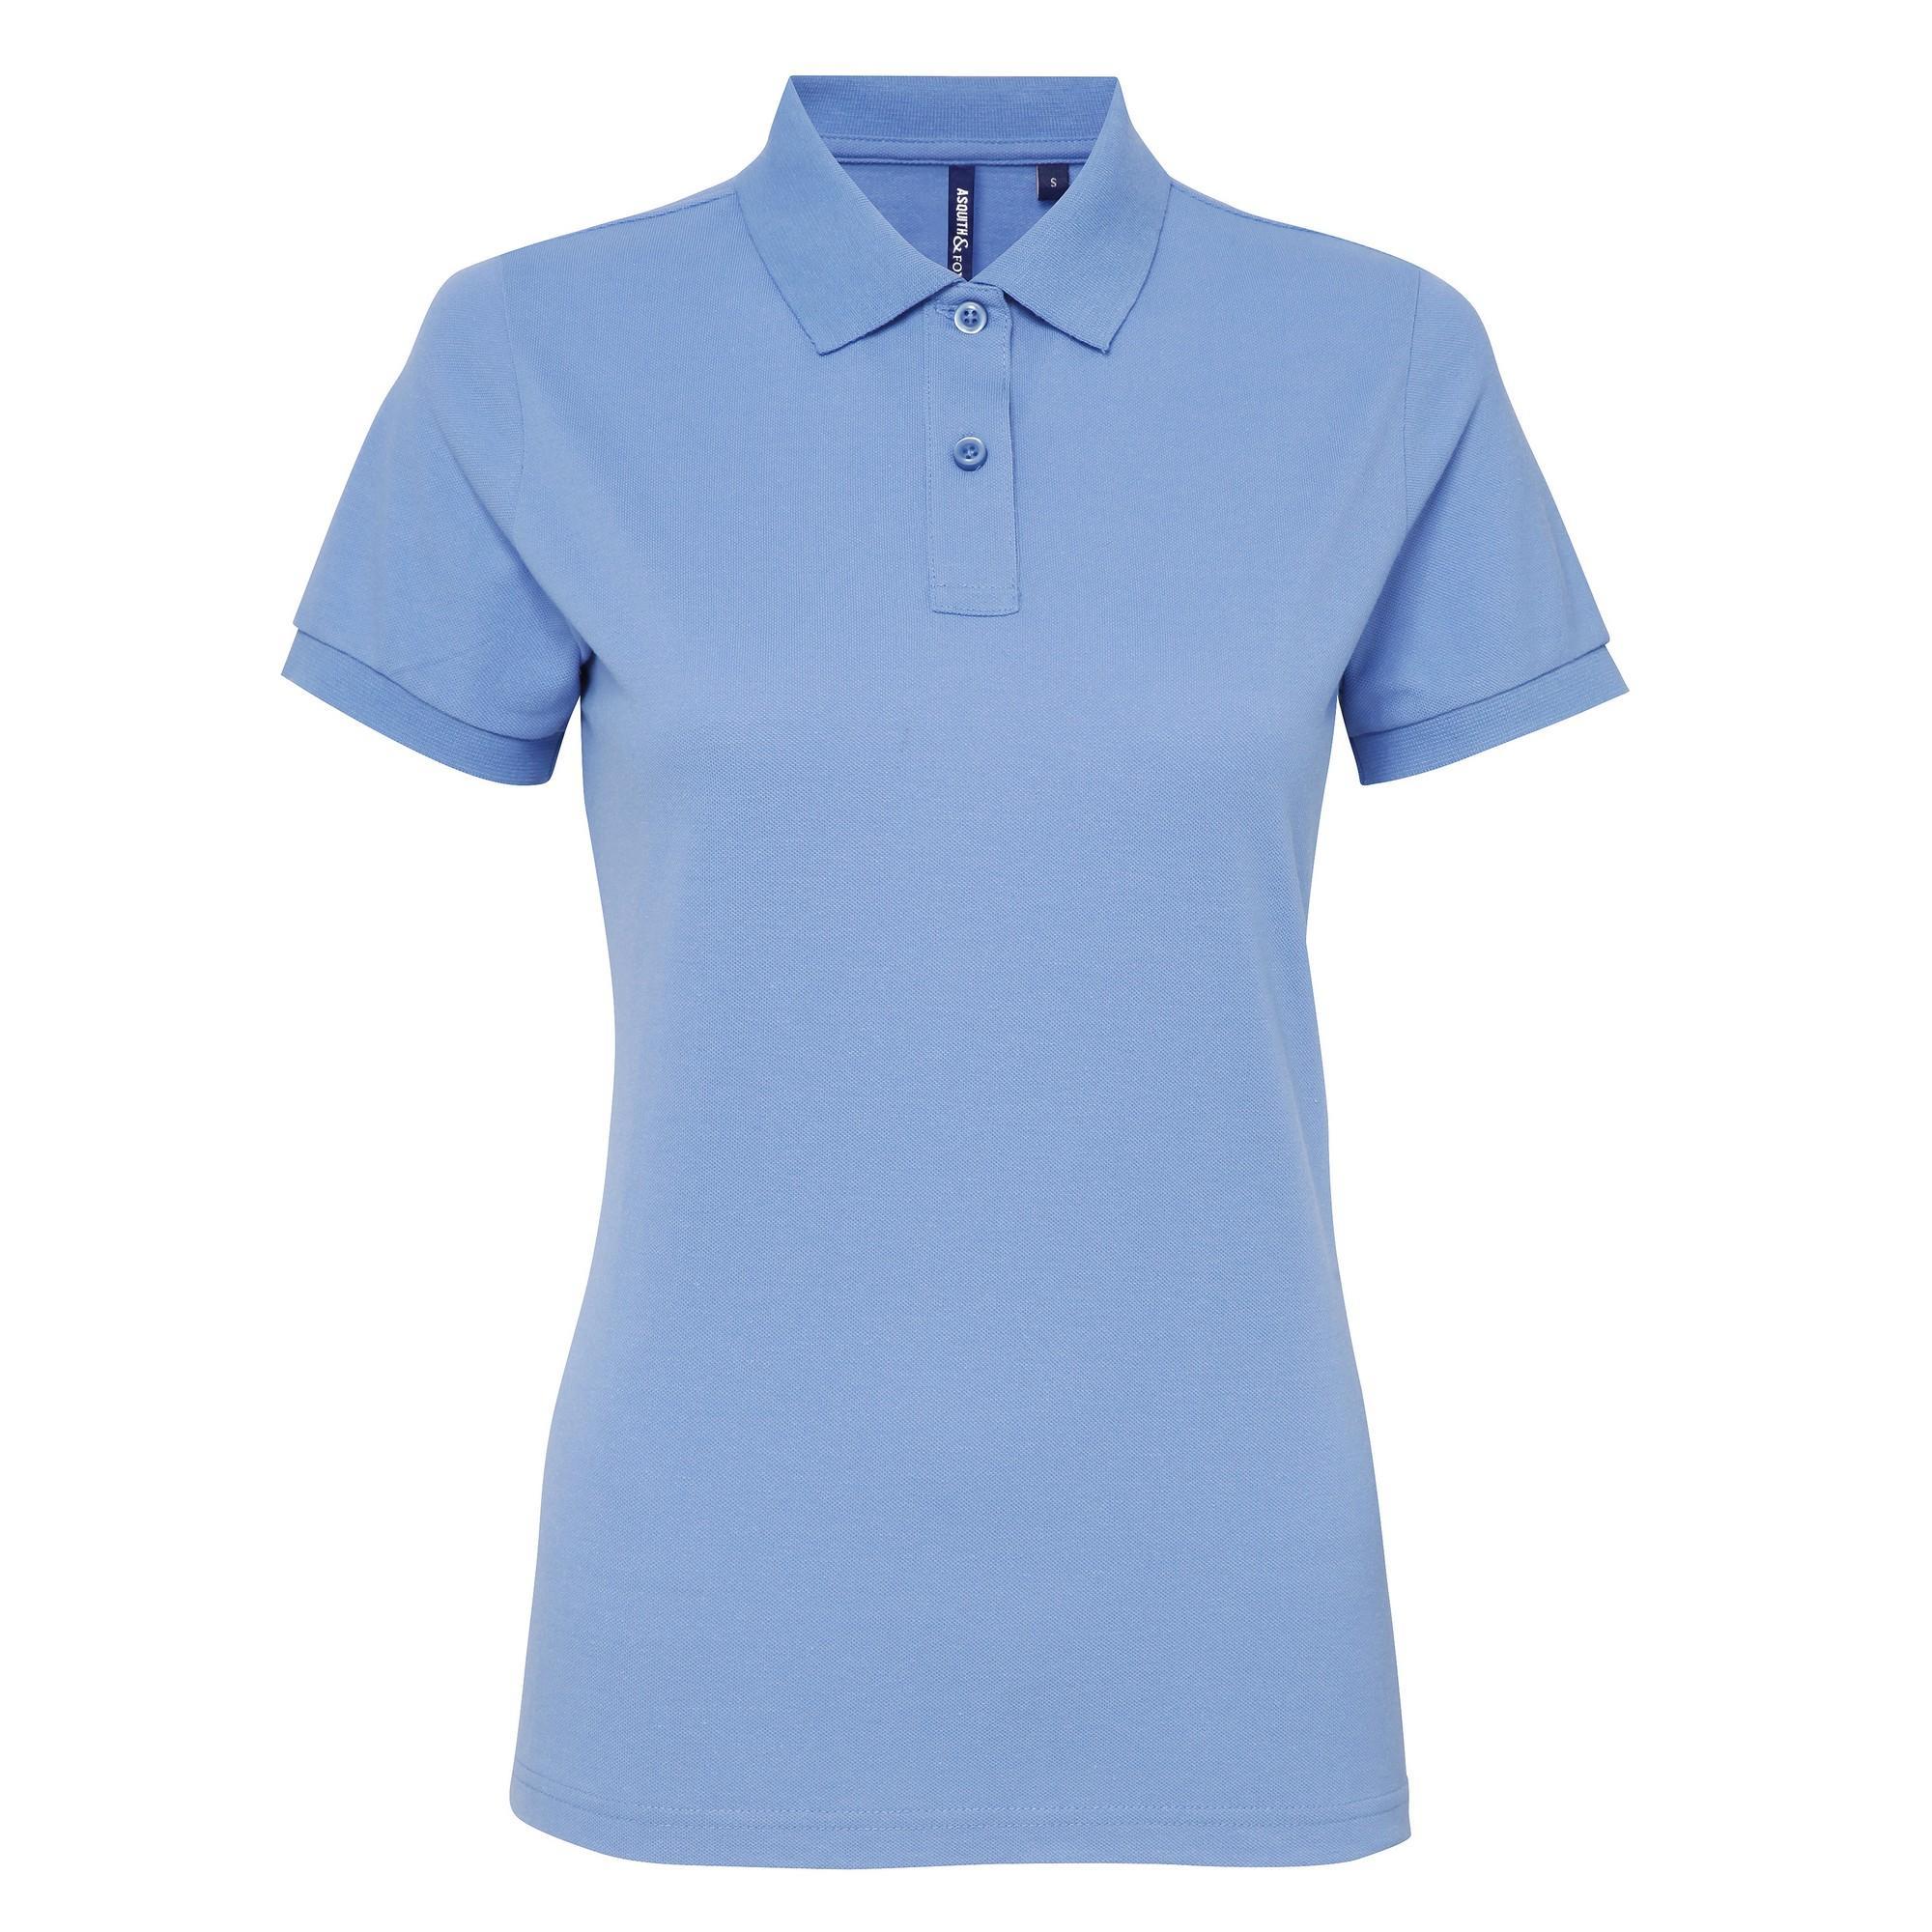 Asquith & Fox Womens/Ladies Short Sleeve Performance Blend Polo Shirt (Cornflower) (2XL)